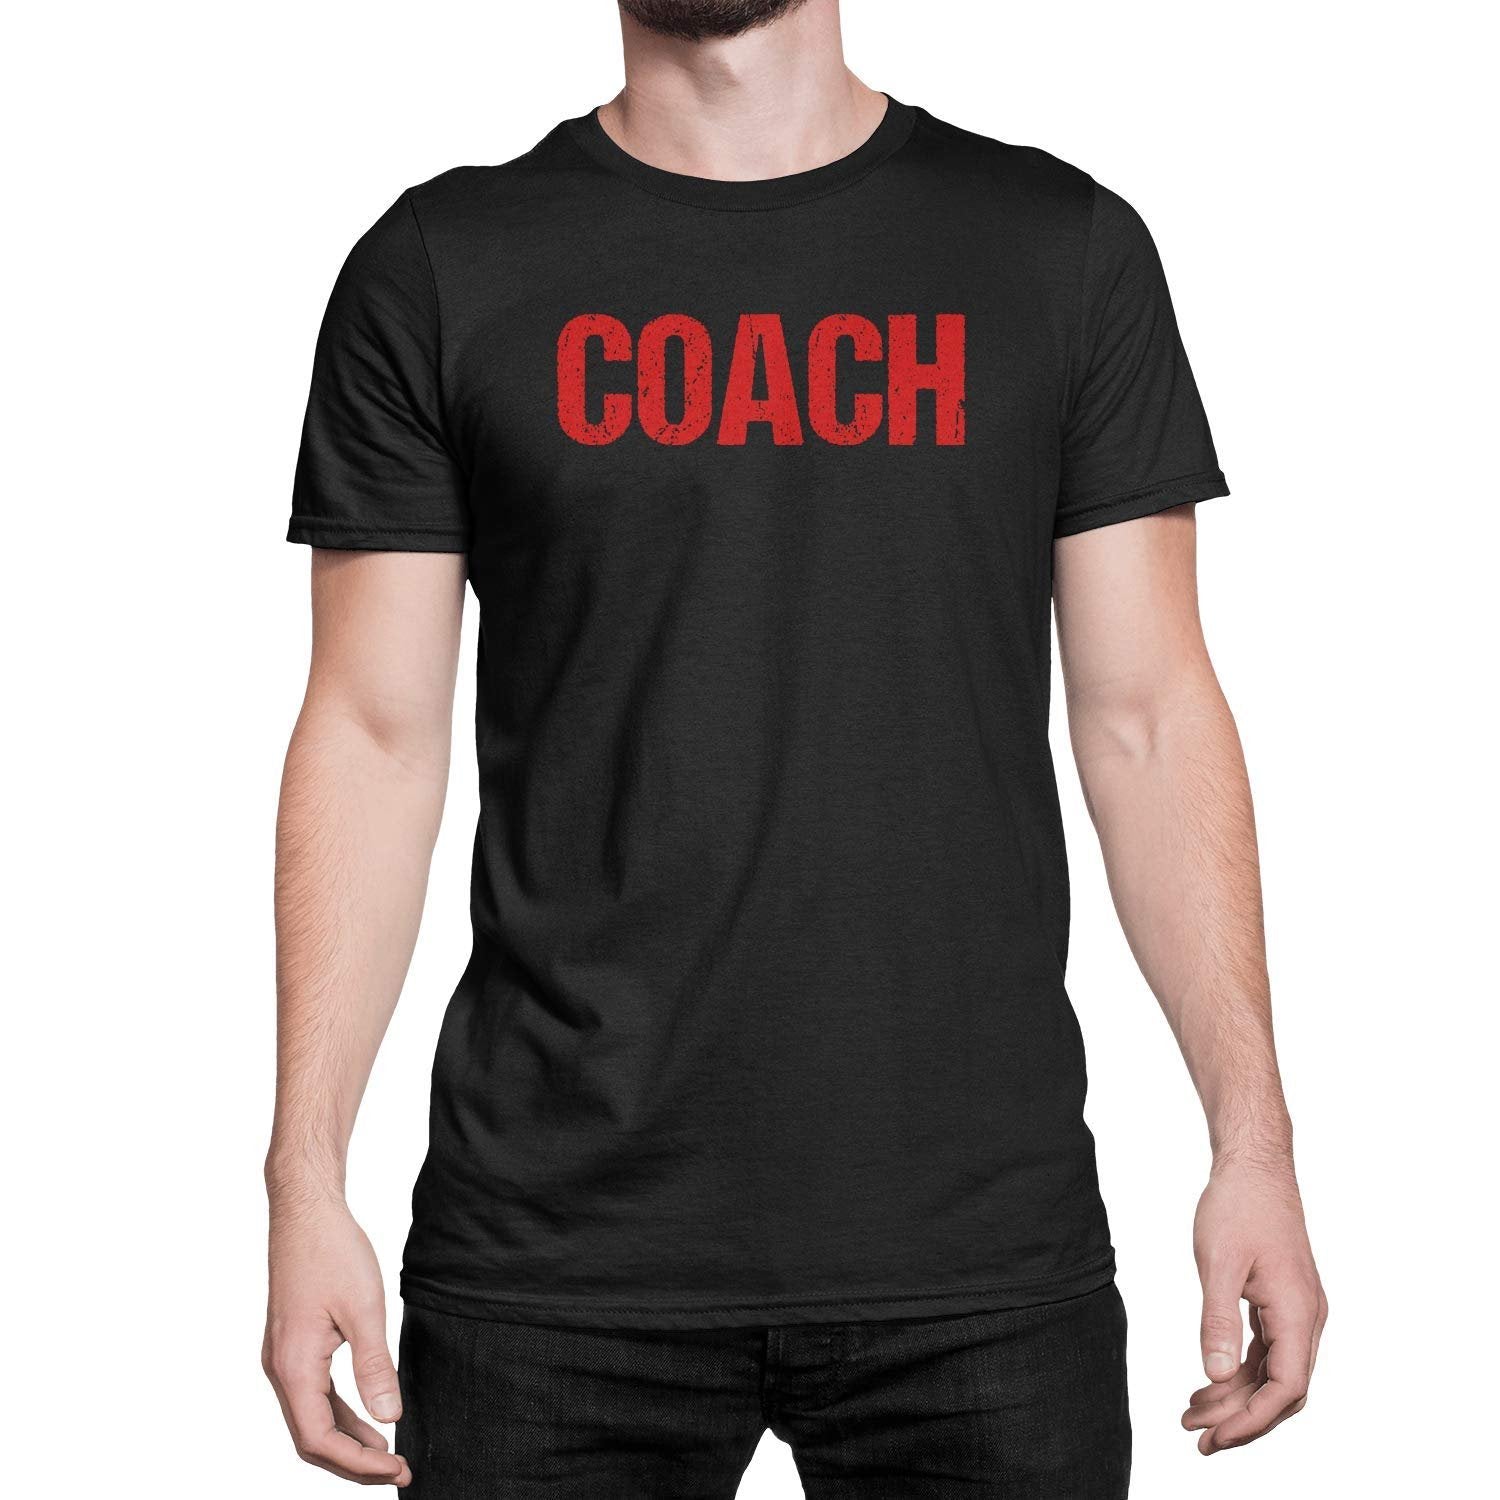 Coach T-Shirt Sports Coaching Tee Shirt (Black & Red, Distressed)